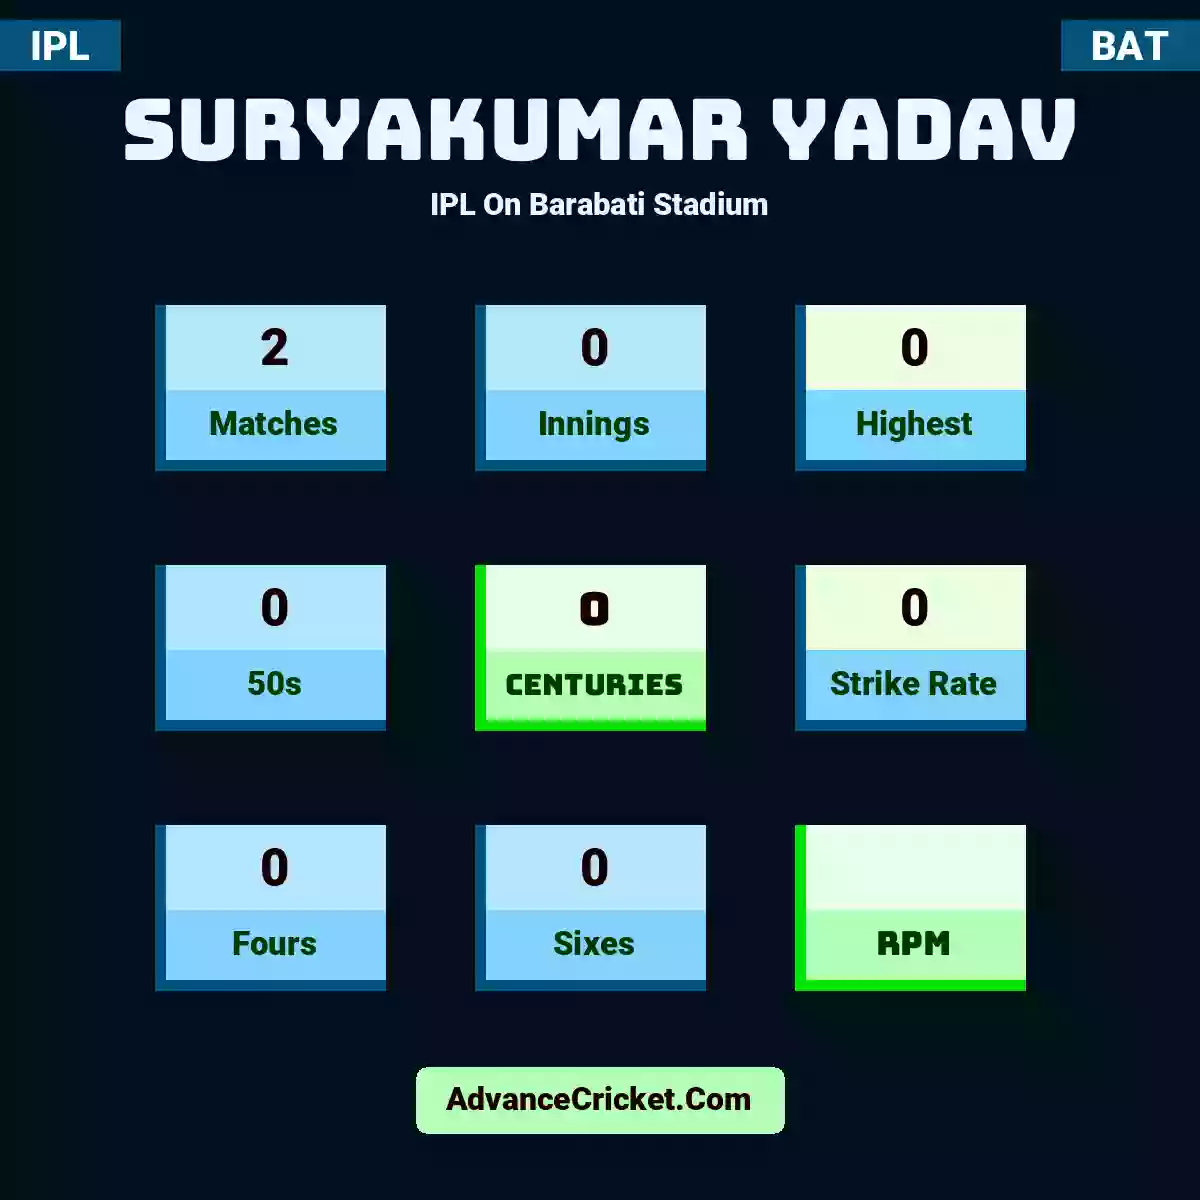 Suryakumar Yadav IPL  On Barabati Stadium, Suryakumar Yadav played 2 matches, scored 0 runs as highest, 0 half-centuries, and 0 centuries, with a strike rate of 0. S.Yadav hit 0 fours and 0 sixes.